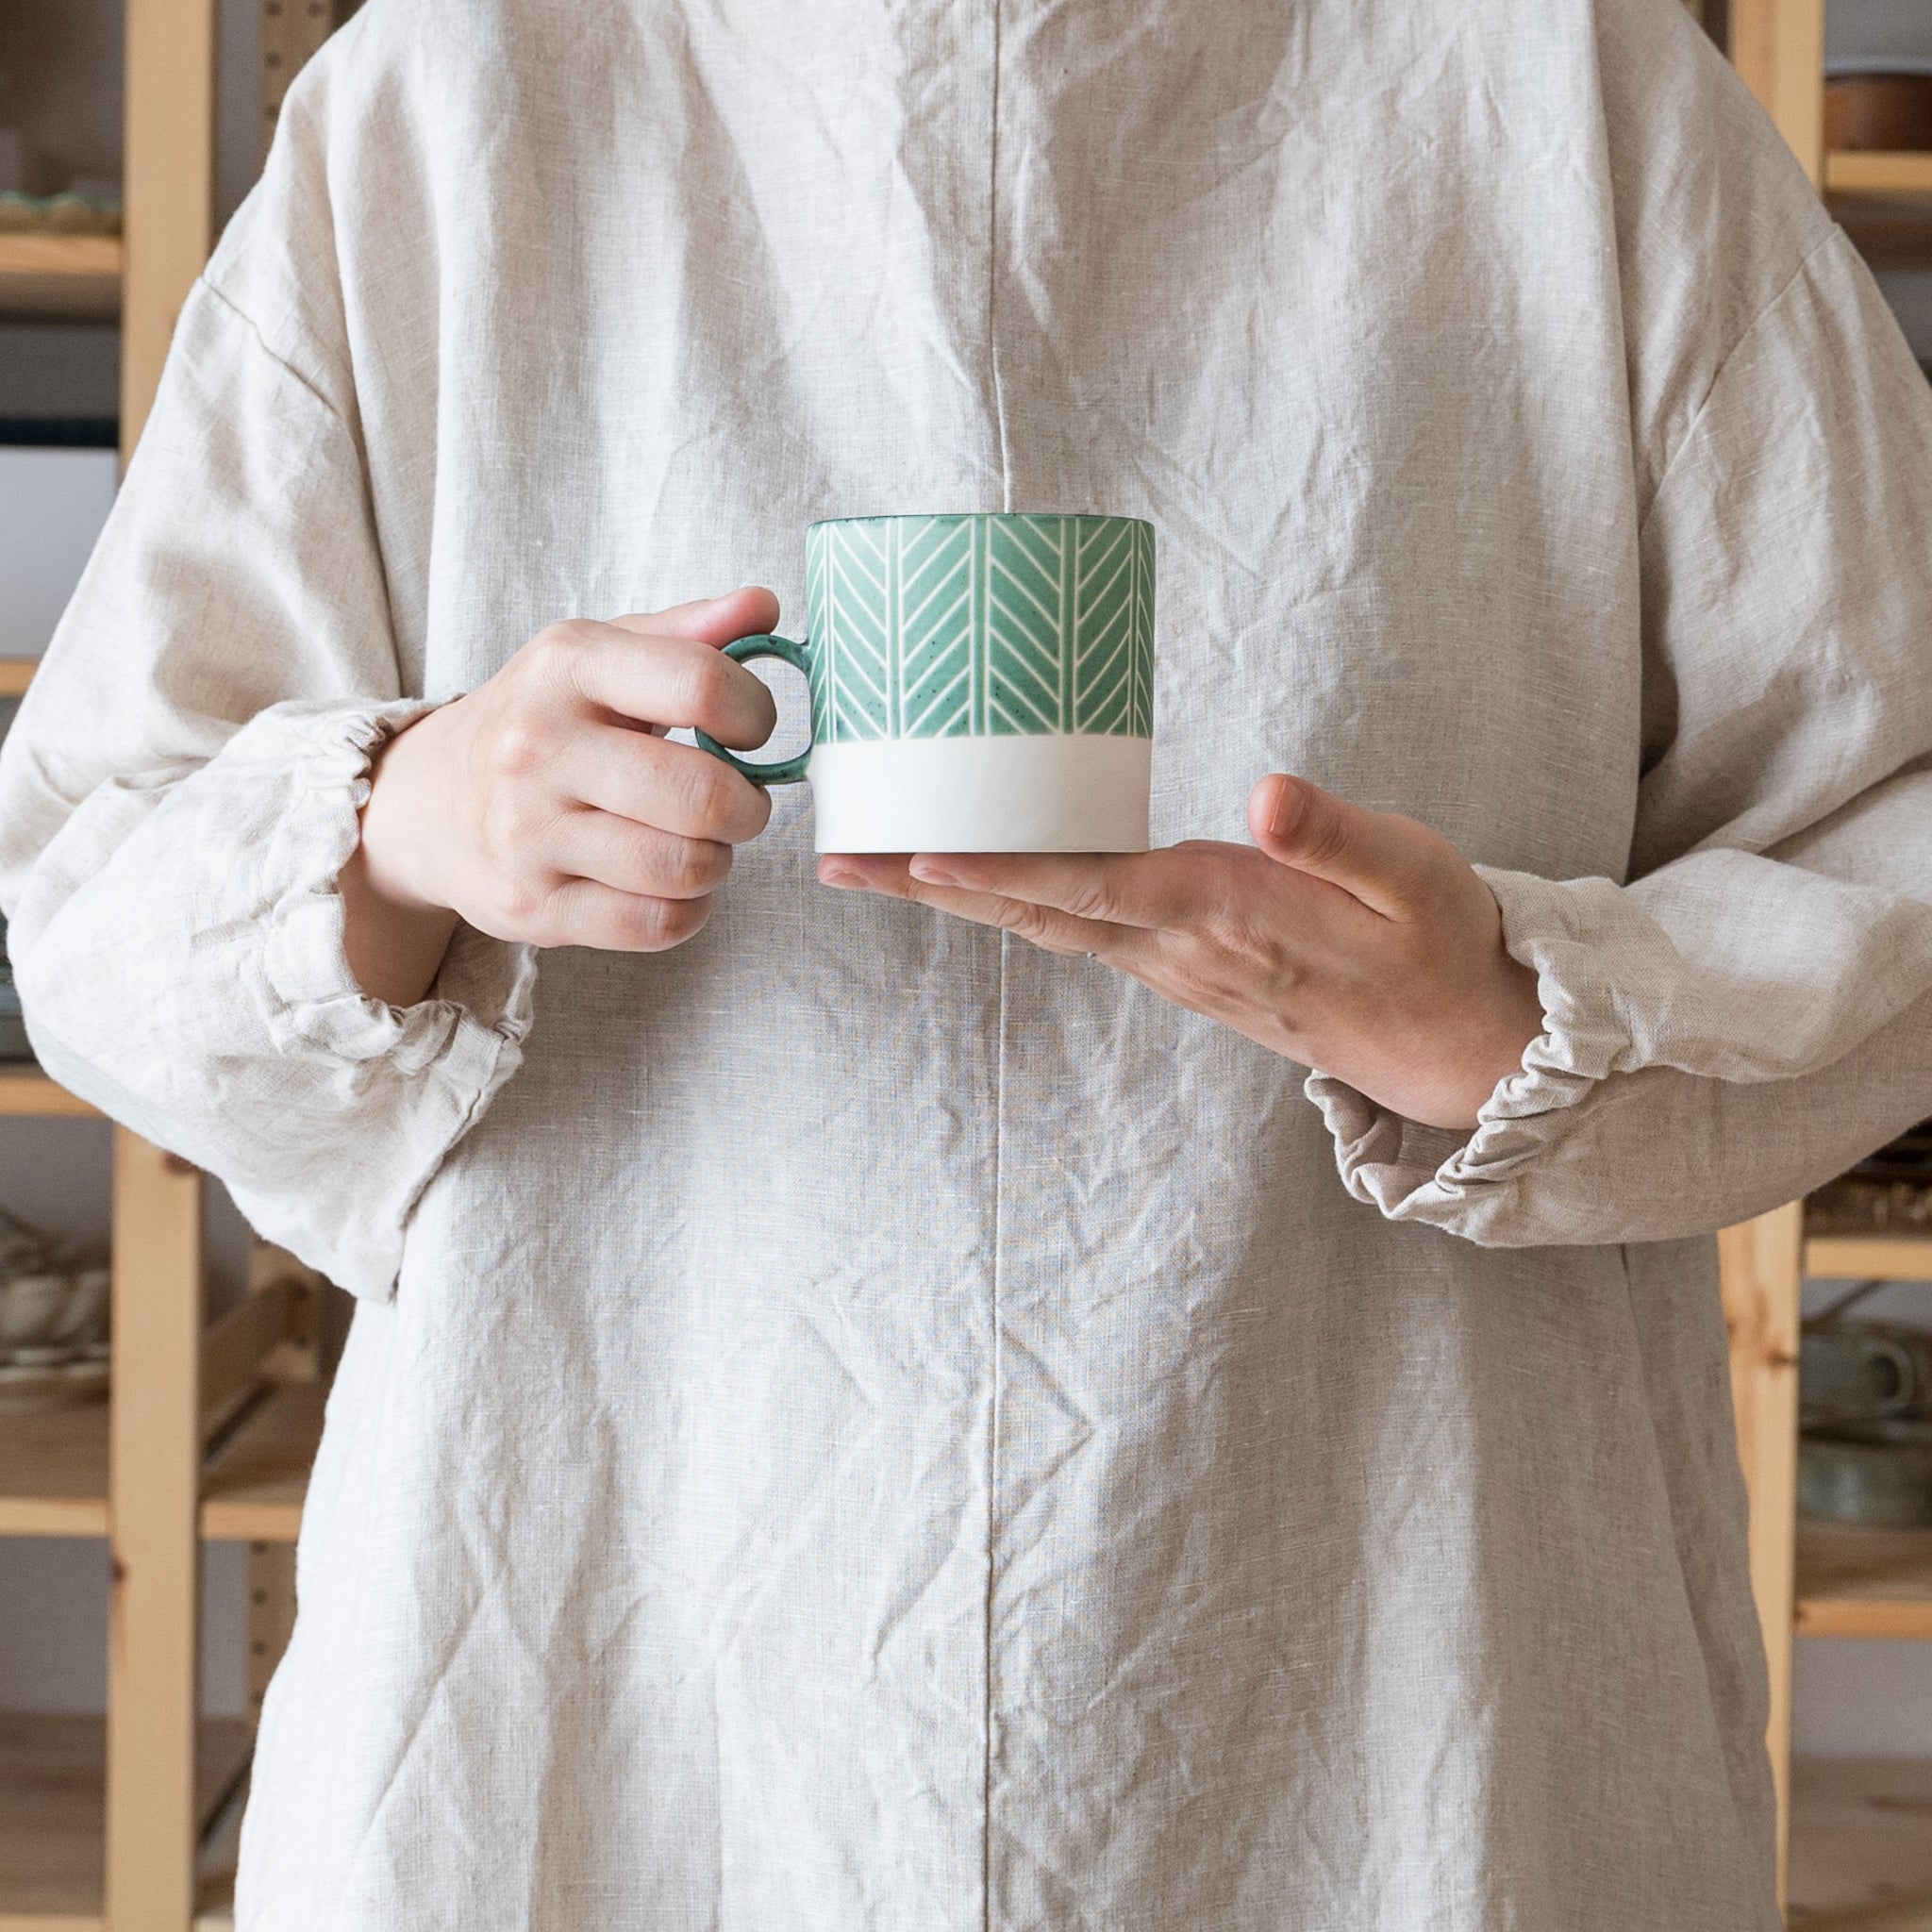 Yukari Nakagawa's mug with a stylish herringbone pattern and green